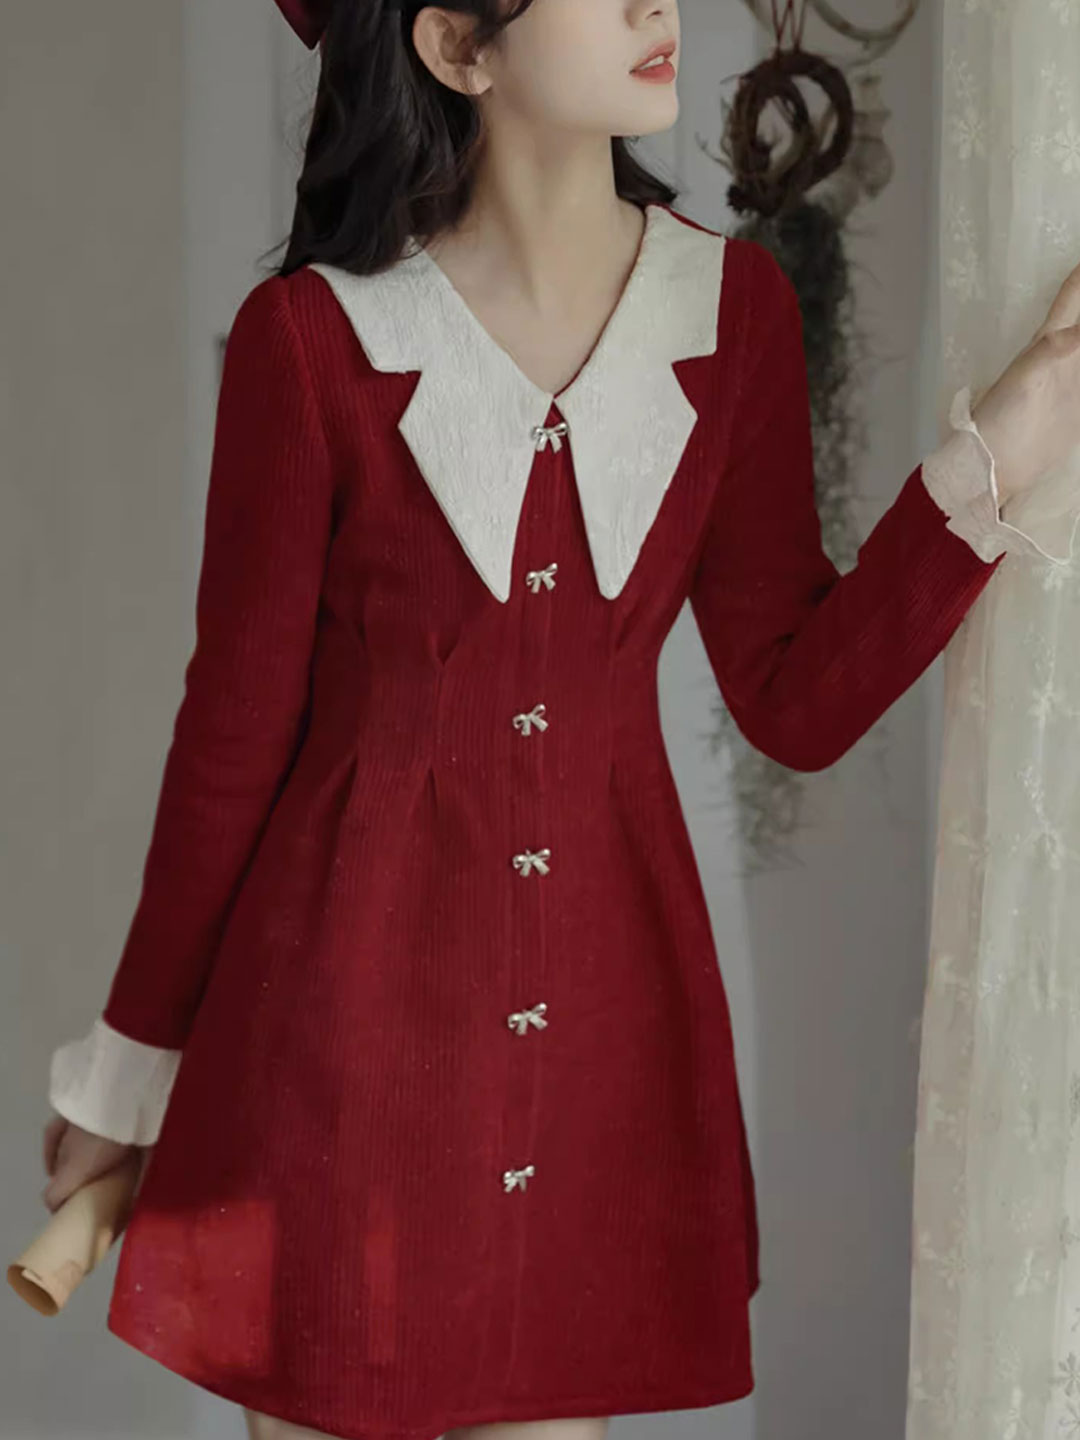 Sarah Classic Doll Collar Contrasting Color Dress